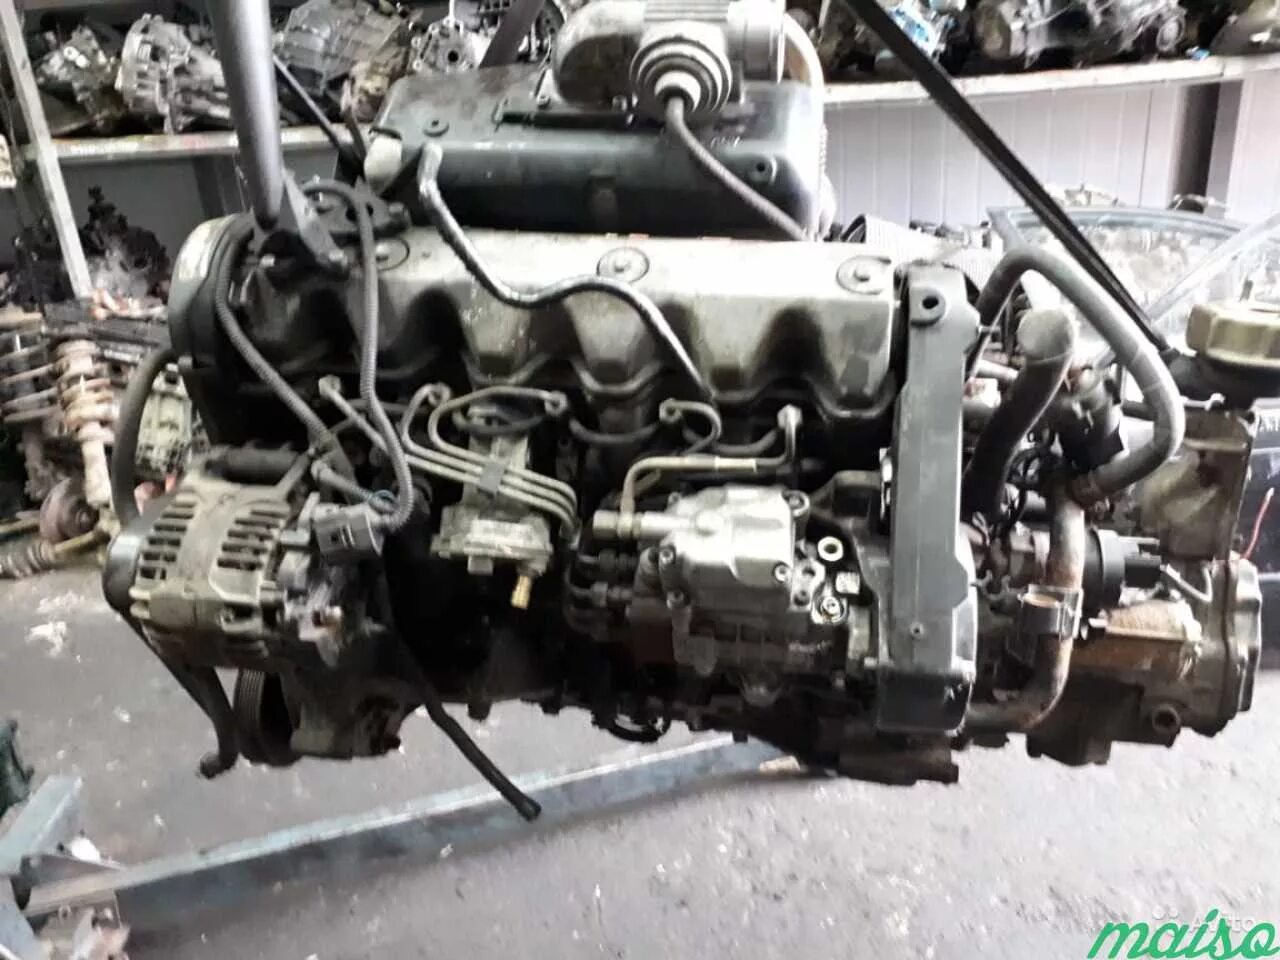 Двигатель AJT 2.5 TDI. ДВС Фольксваген Транспортер 2.5. Фольксваген т4 2.5 тди AJT. Двигатель Фольксваген т4 2.5 дизель.